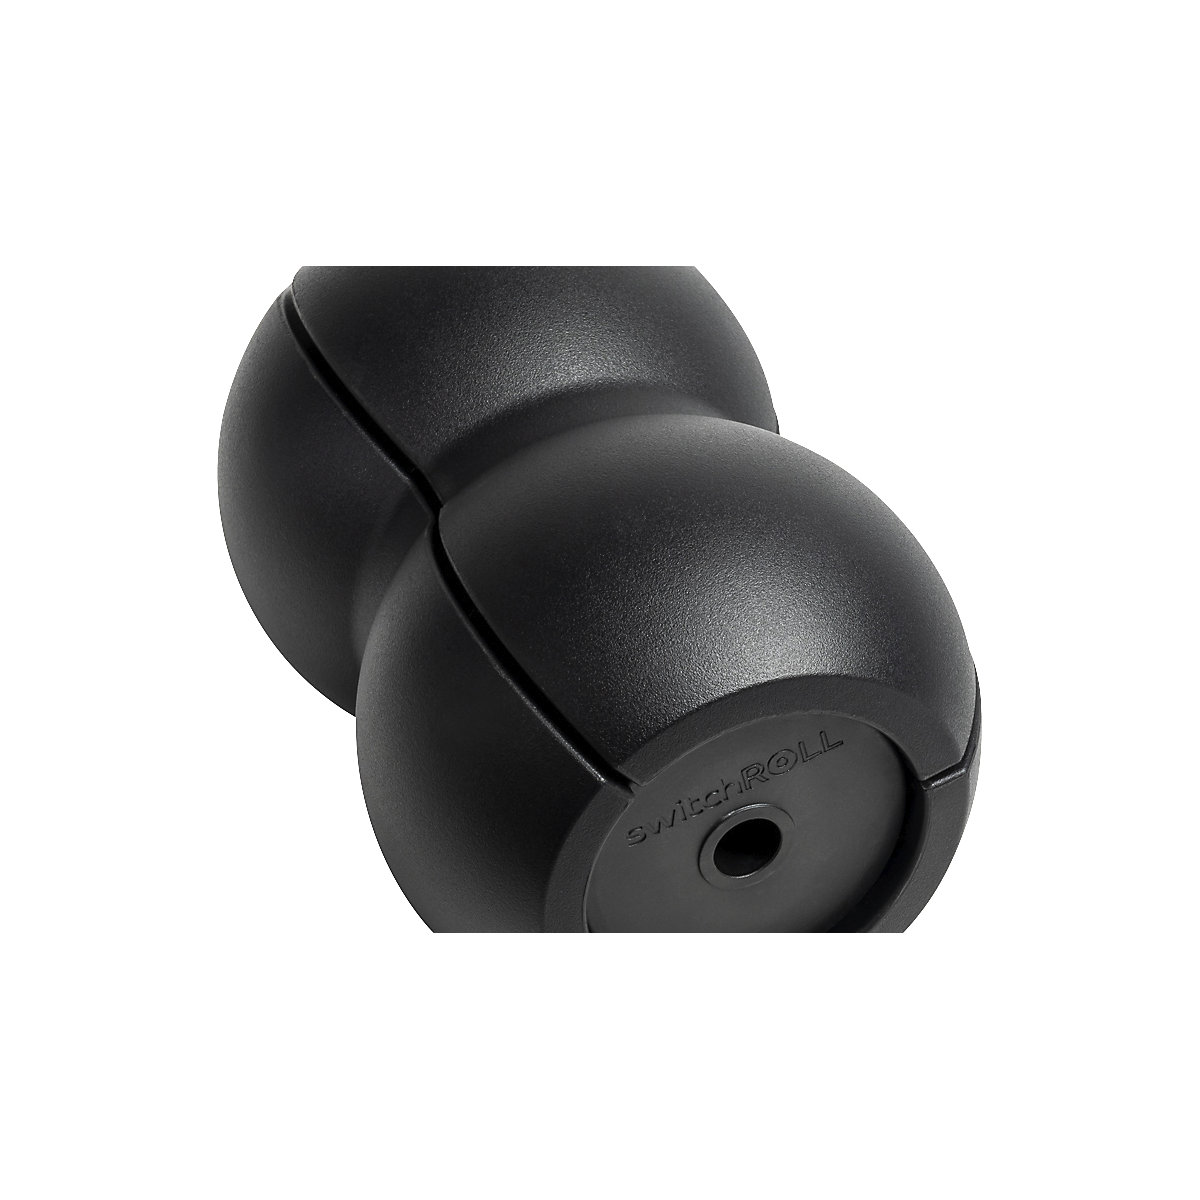 Rouleau switchROLL, double boule lisse – meychair ergonomics